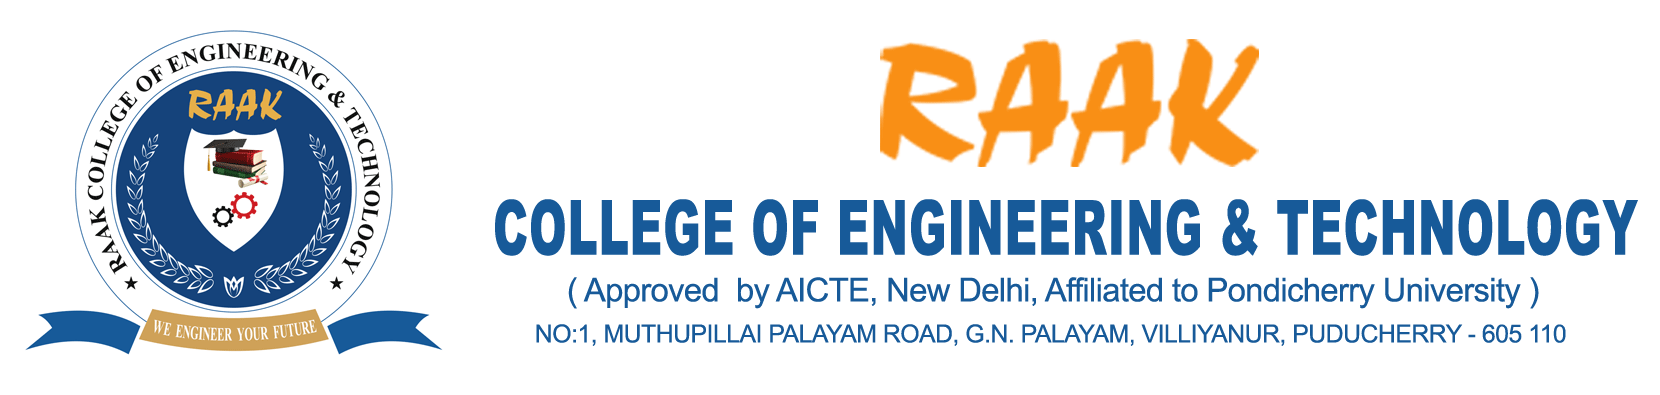 RAAK College of Engineering & Technology